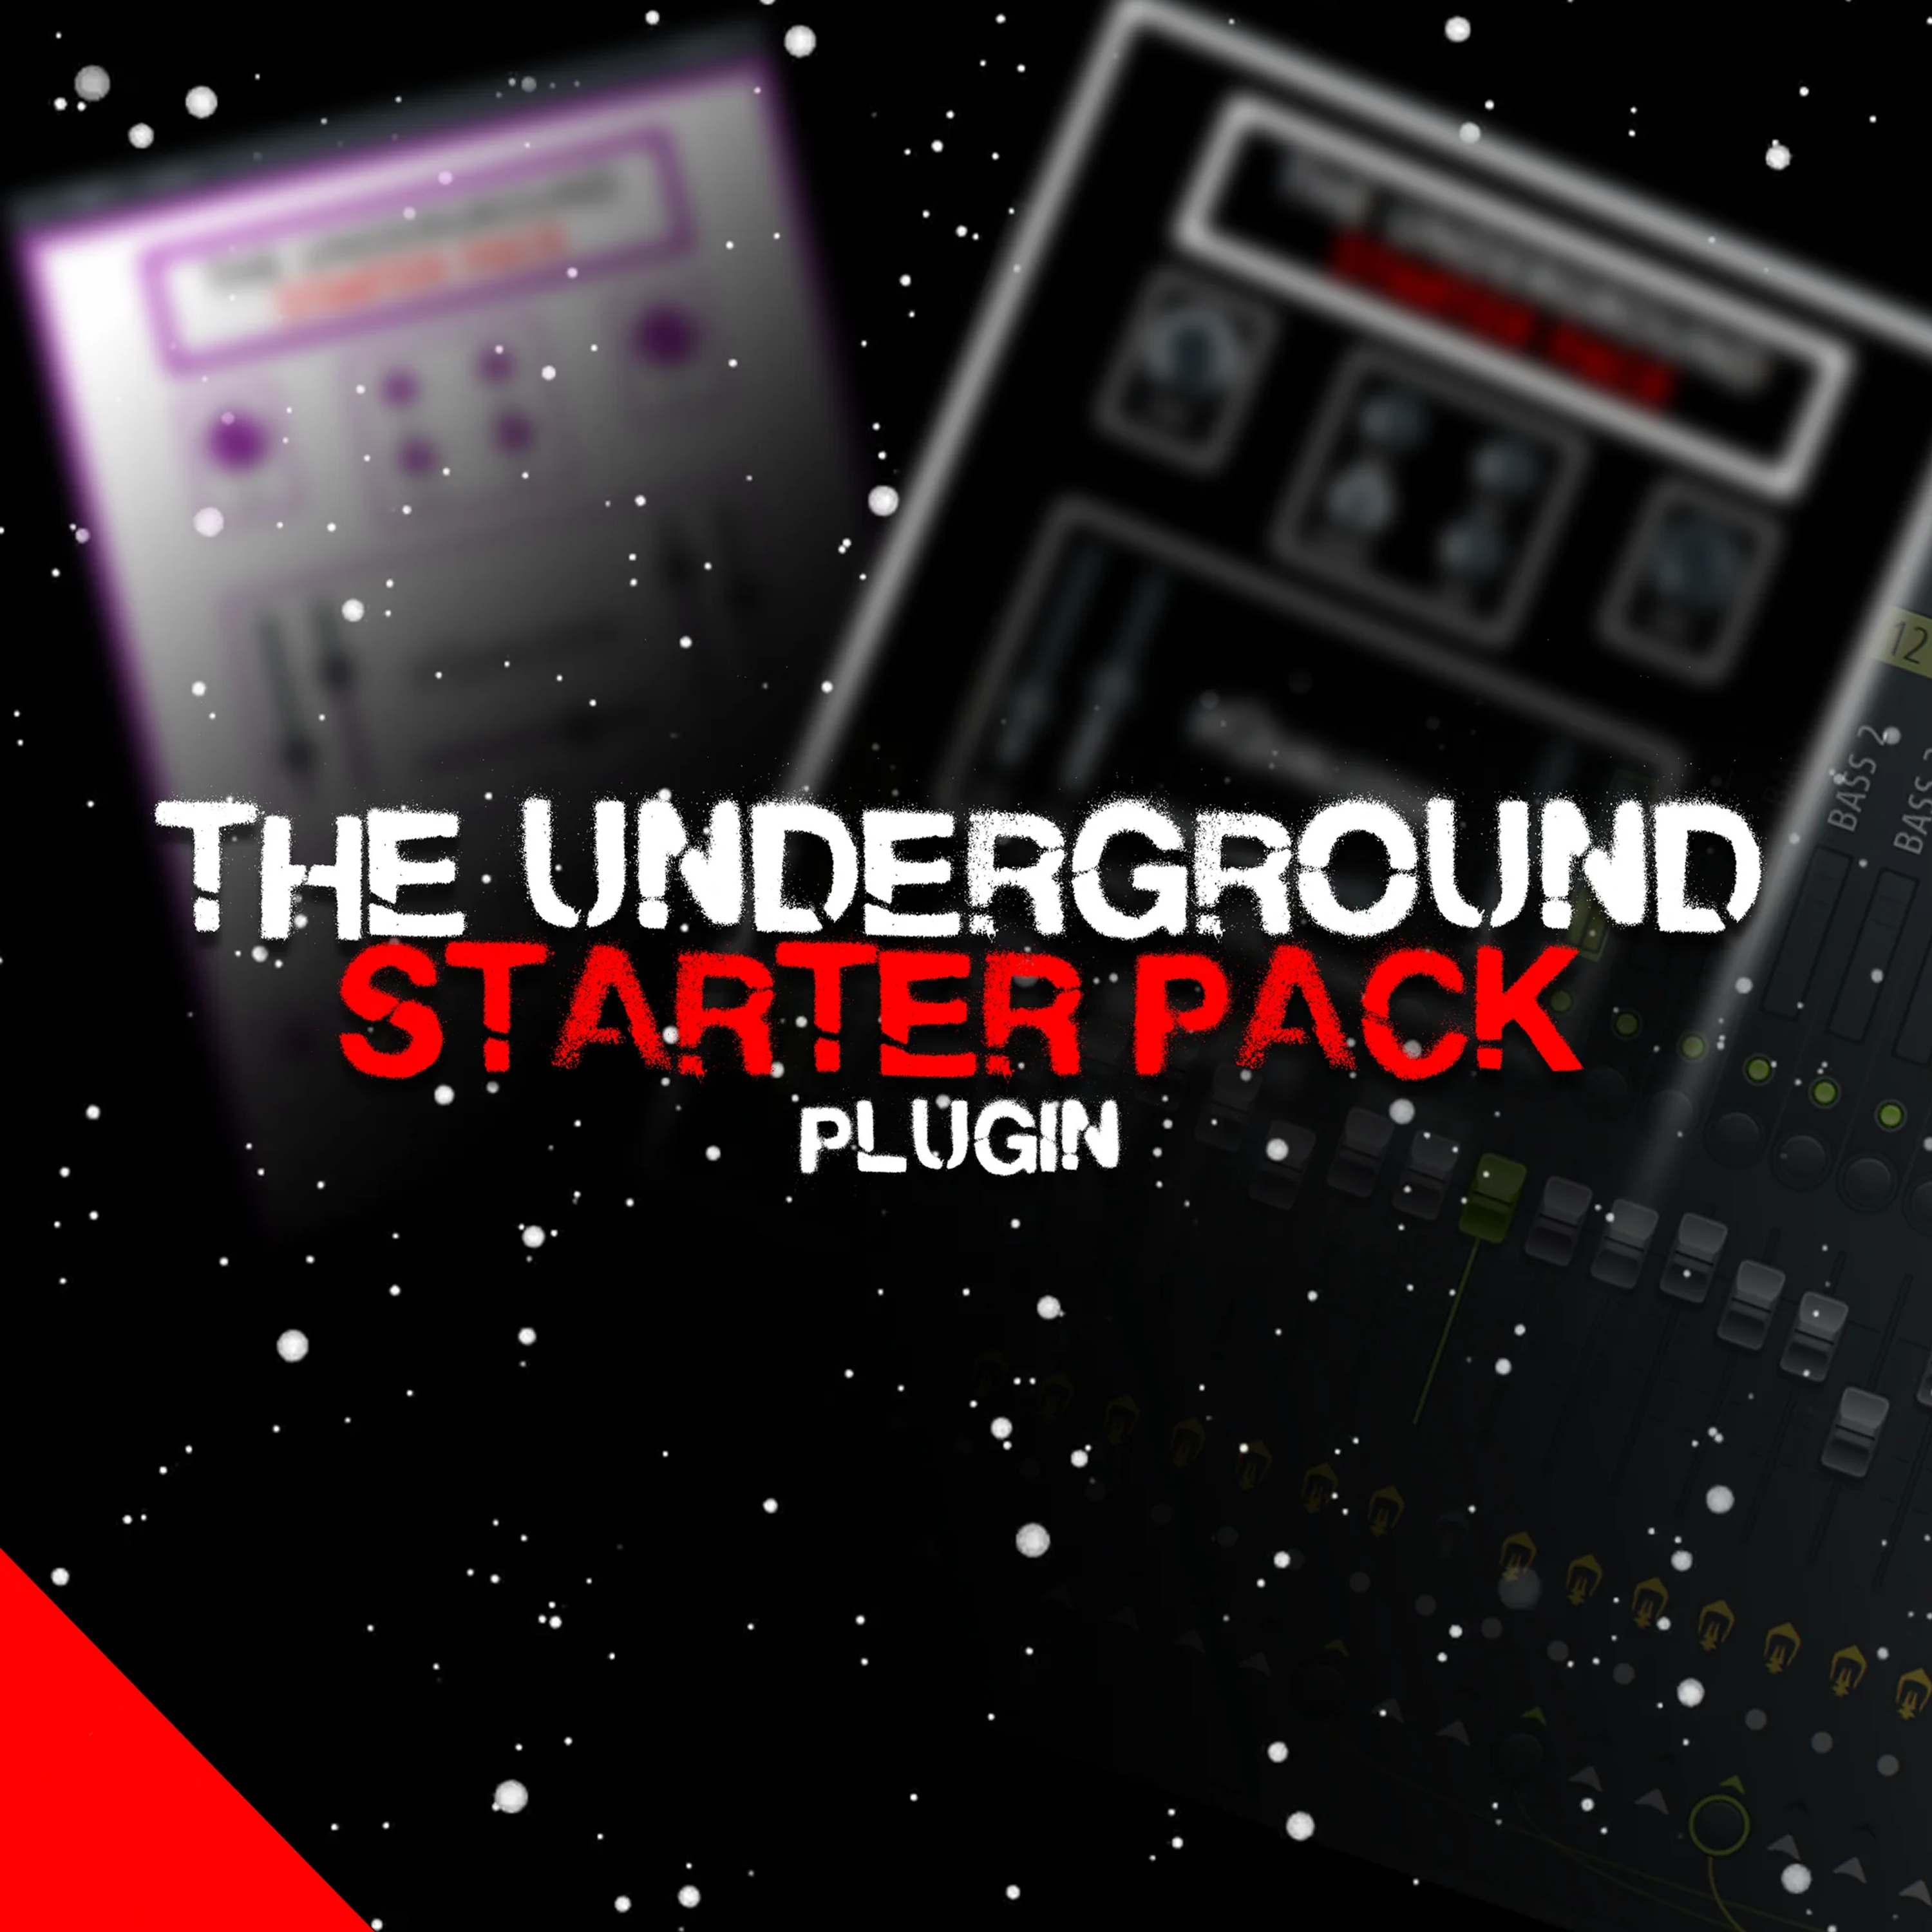 The Starter Pack Plugin